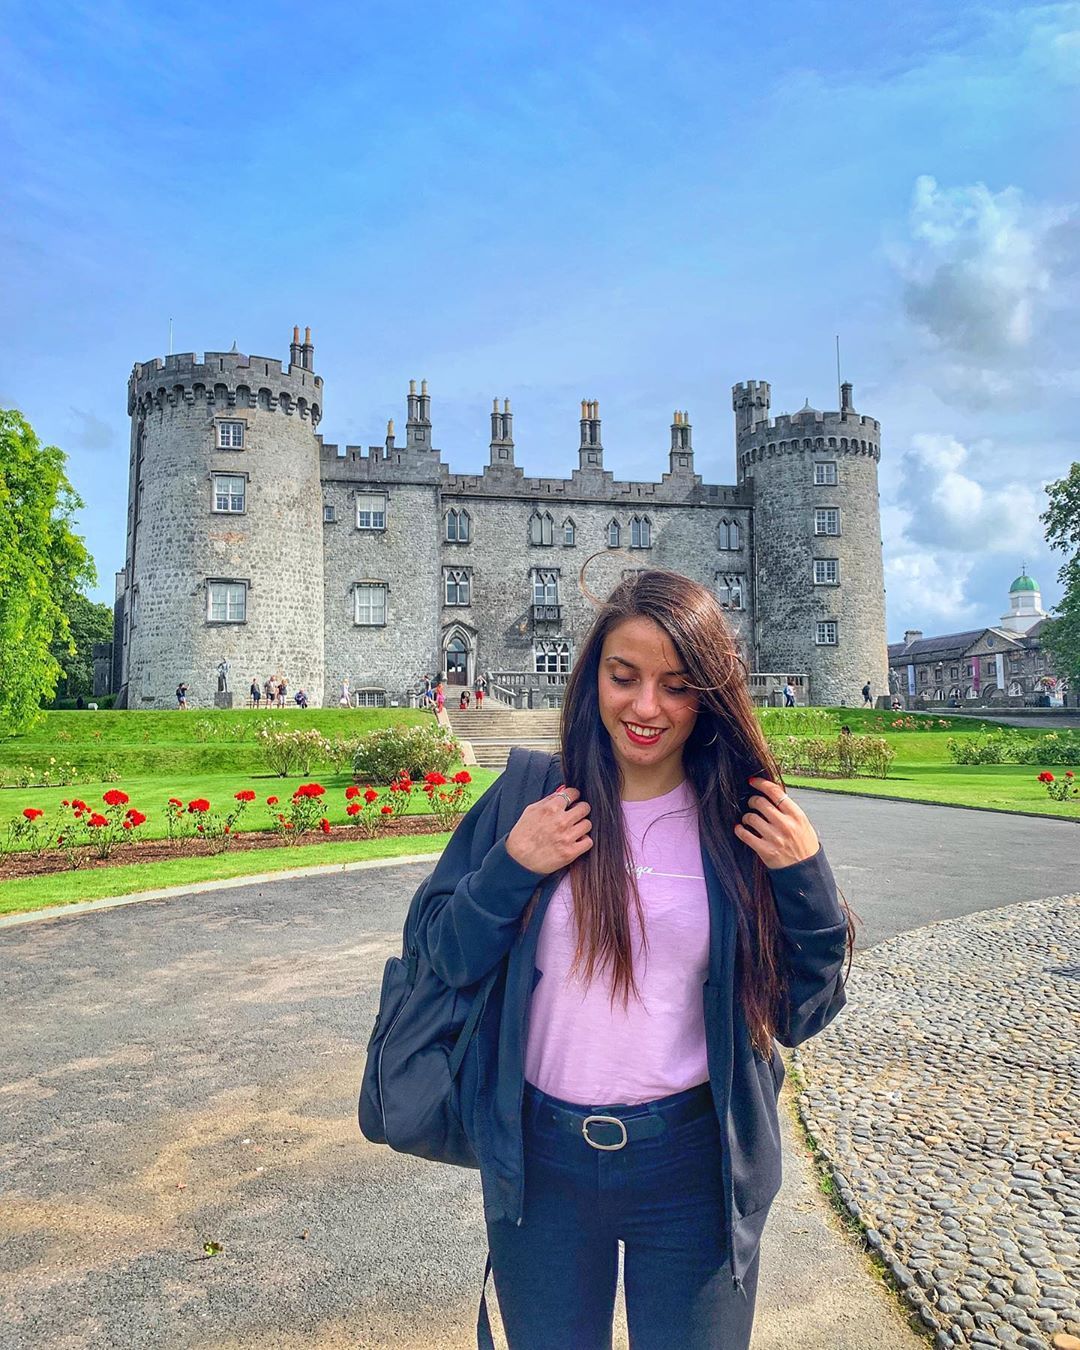 Someone standing near a castle in Ireland